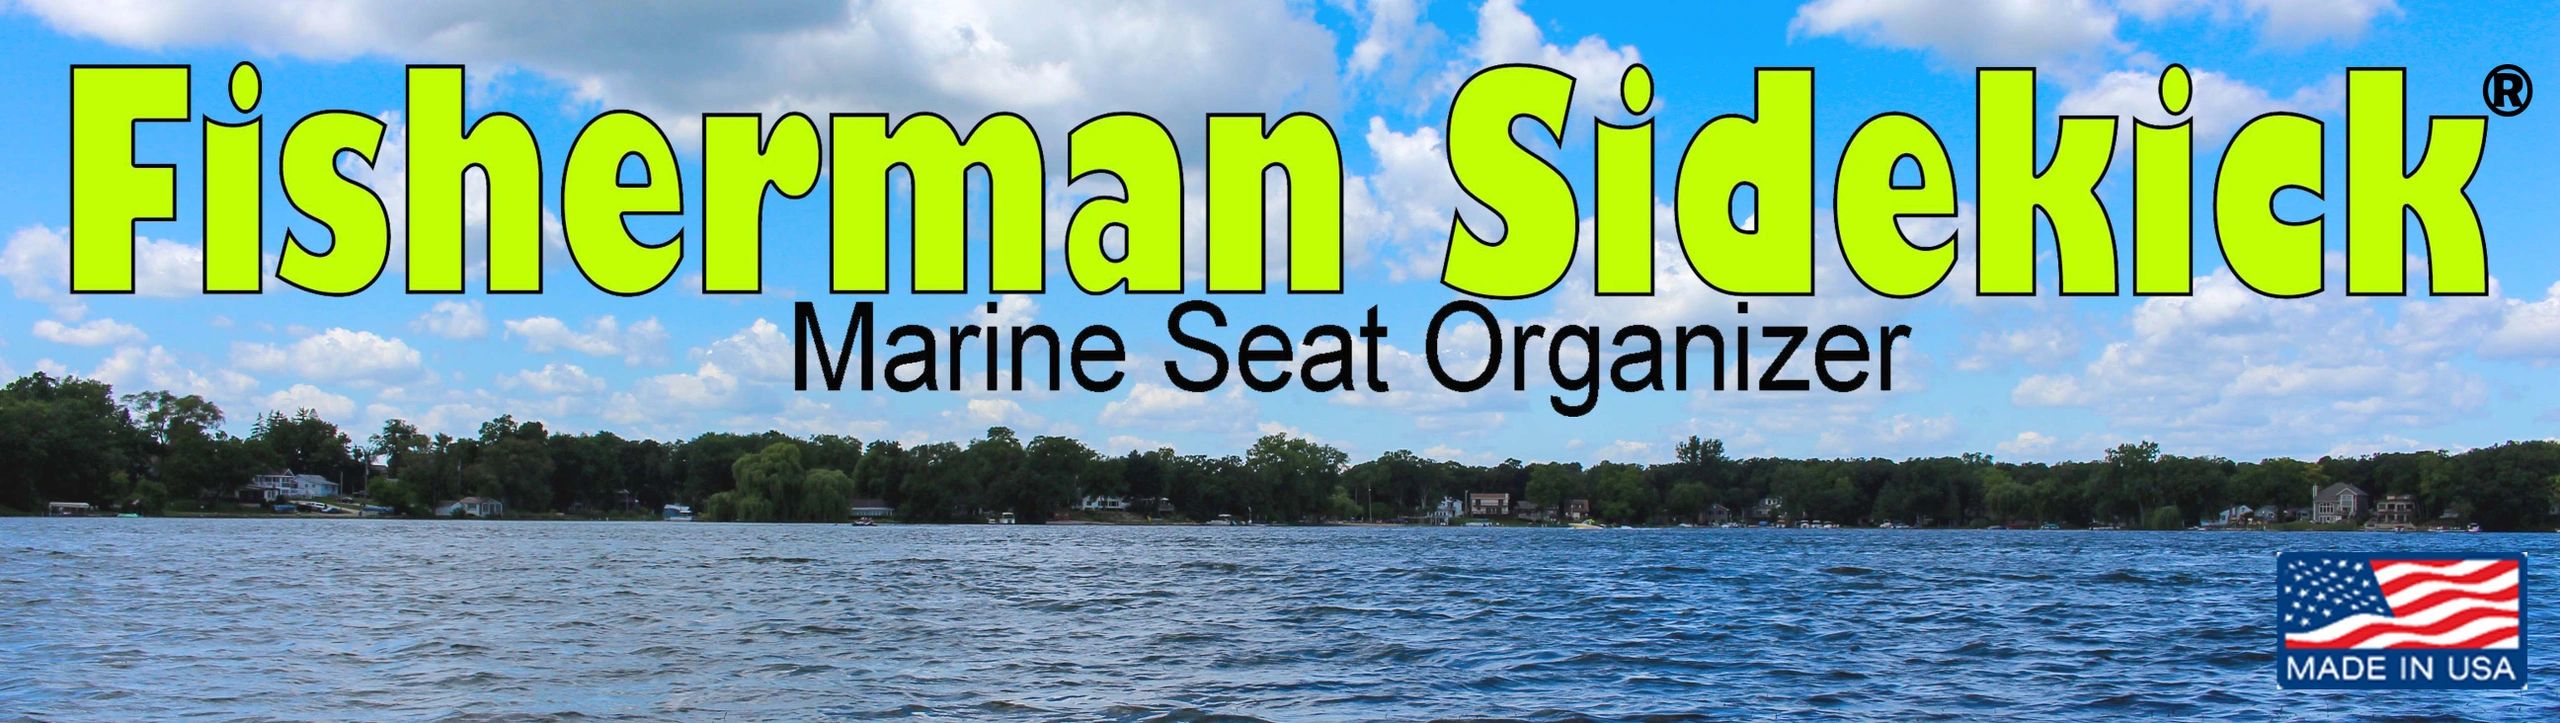 FISHERMAN SIDEKICK - Marine Seat Organizer, Fisherman Sidekick